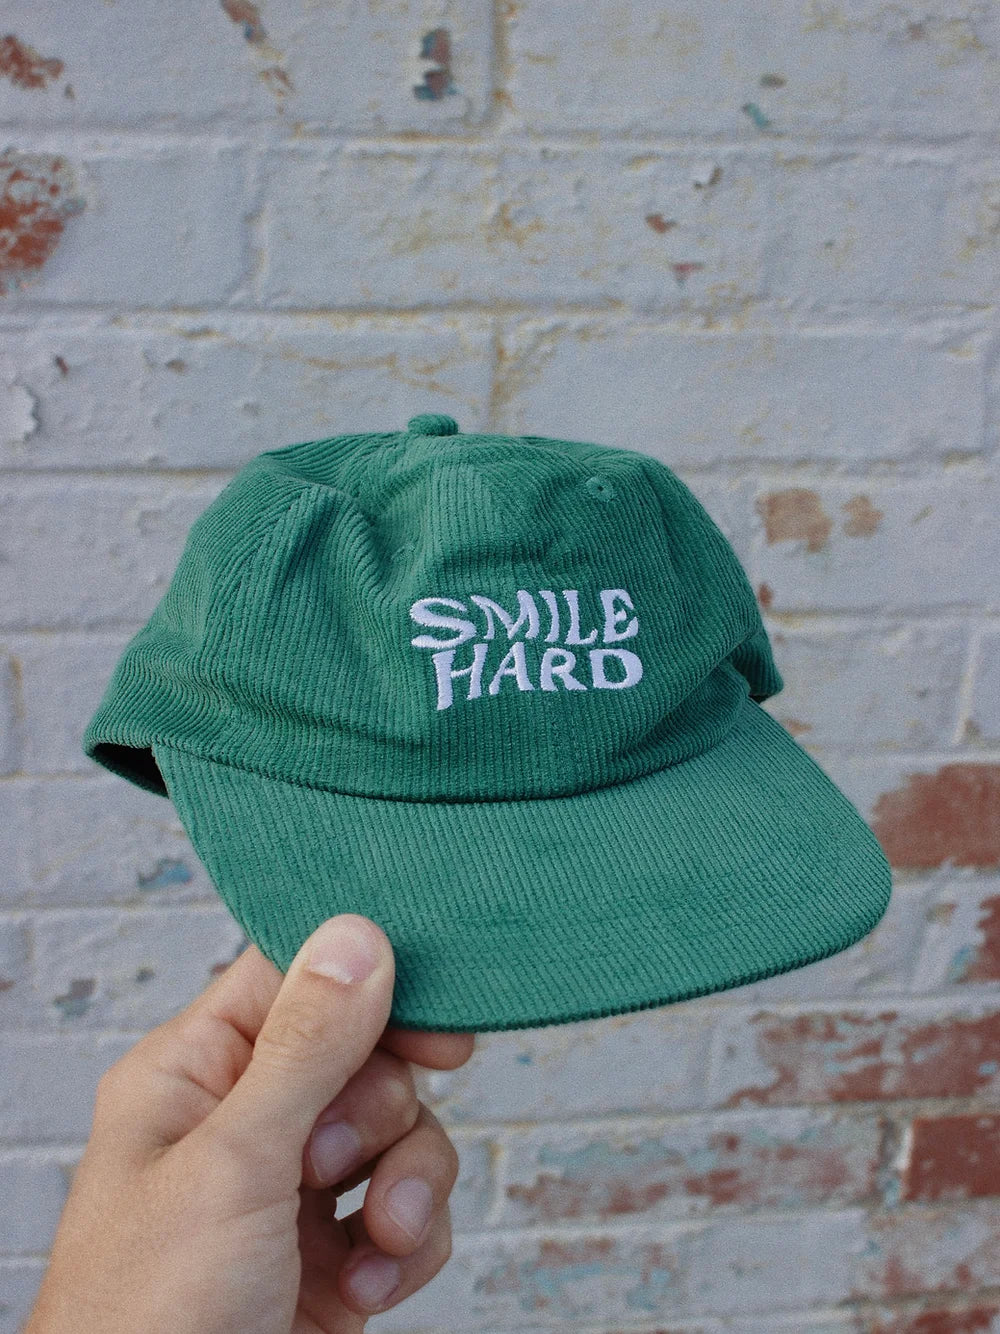 Green Smile Hard Hat